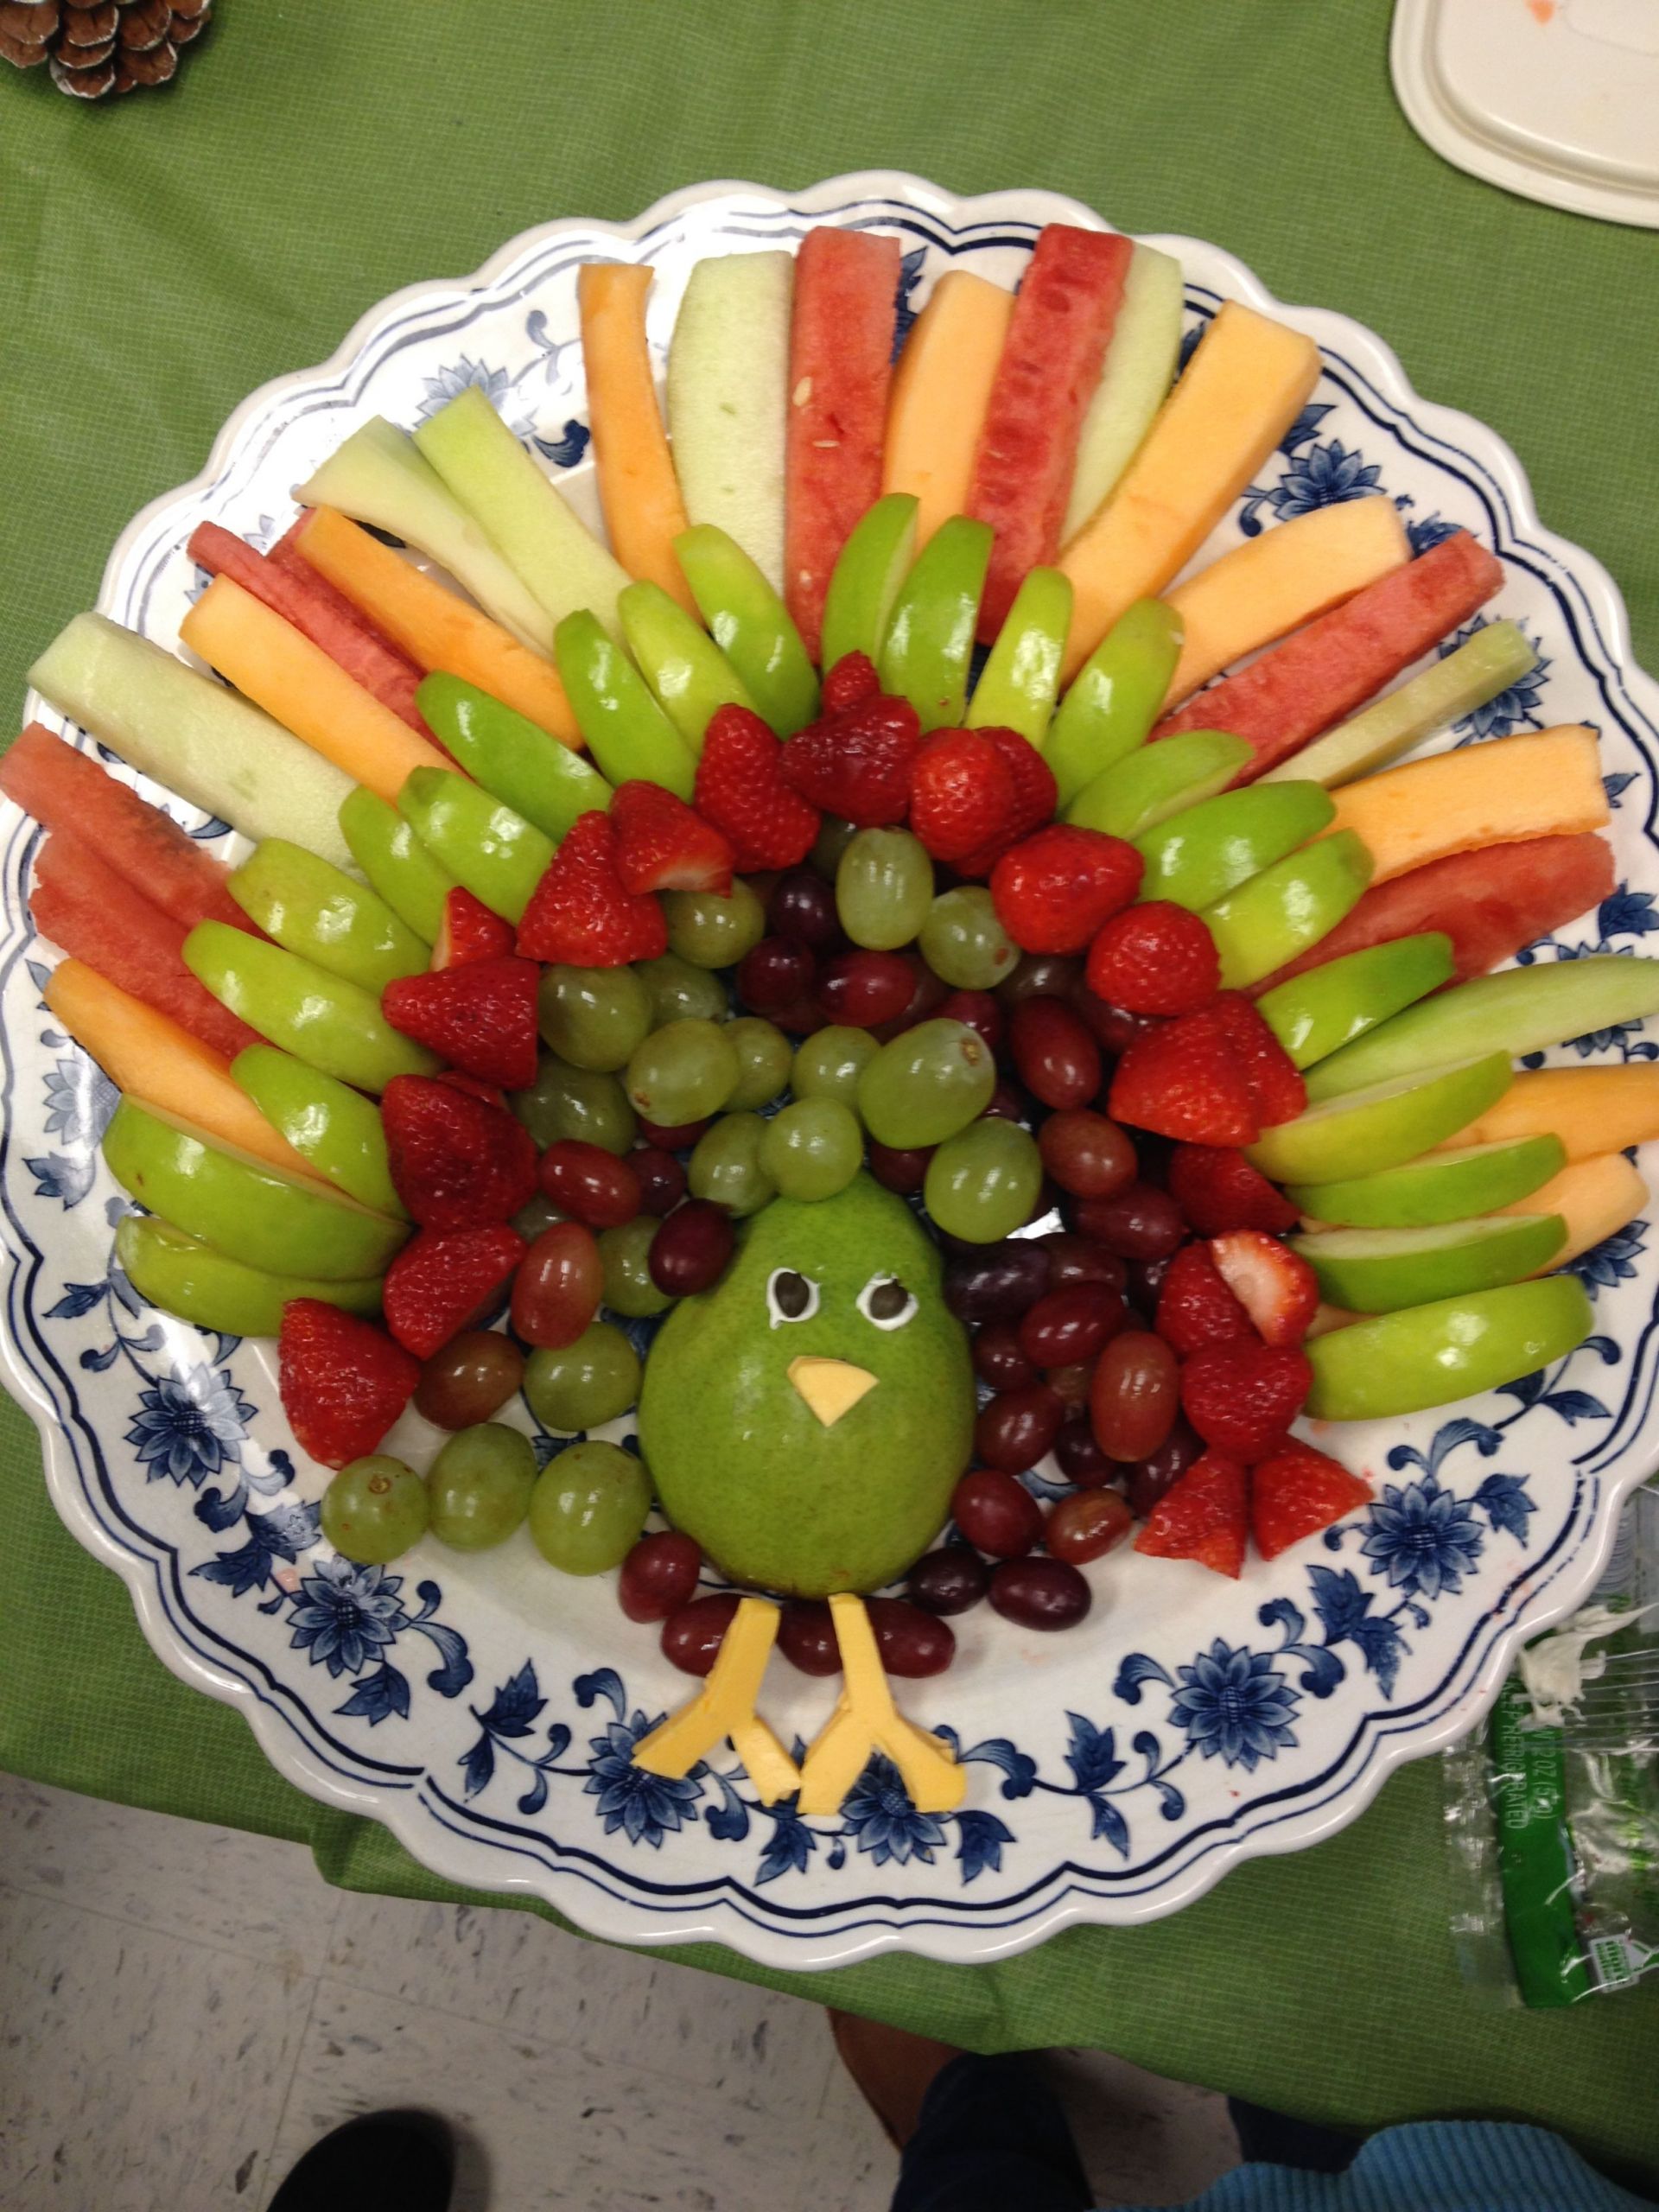 Thanksgiving Fruit Platter Ideas
 Turkey Fruit Platter